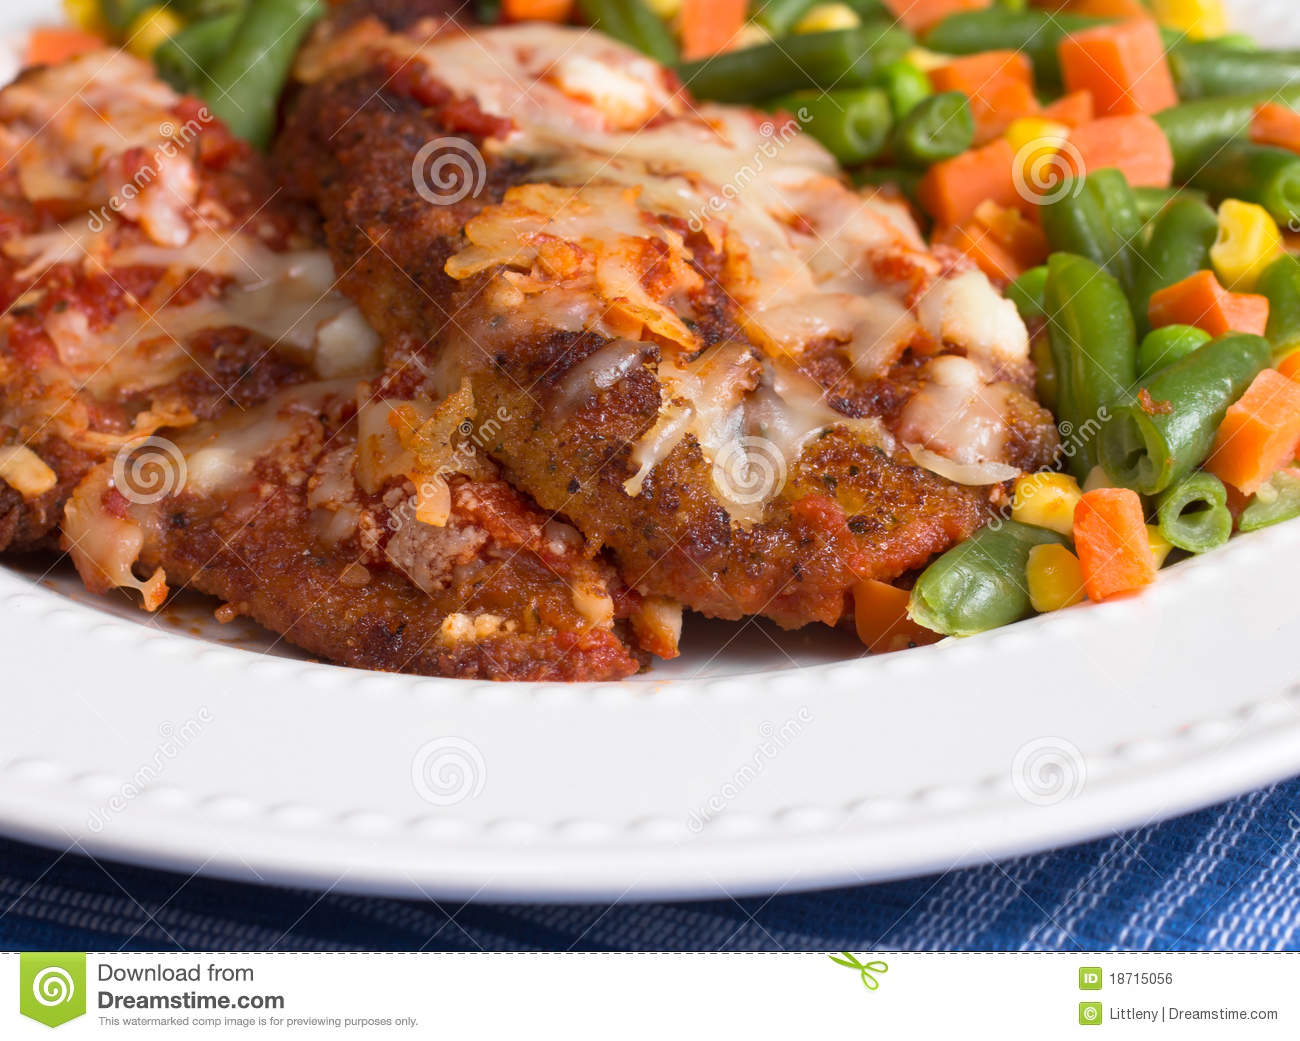 Chicken Parmesan Royalty Free Stock Image   Image  18715056